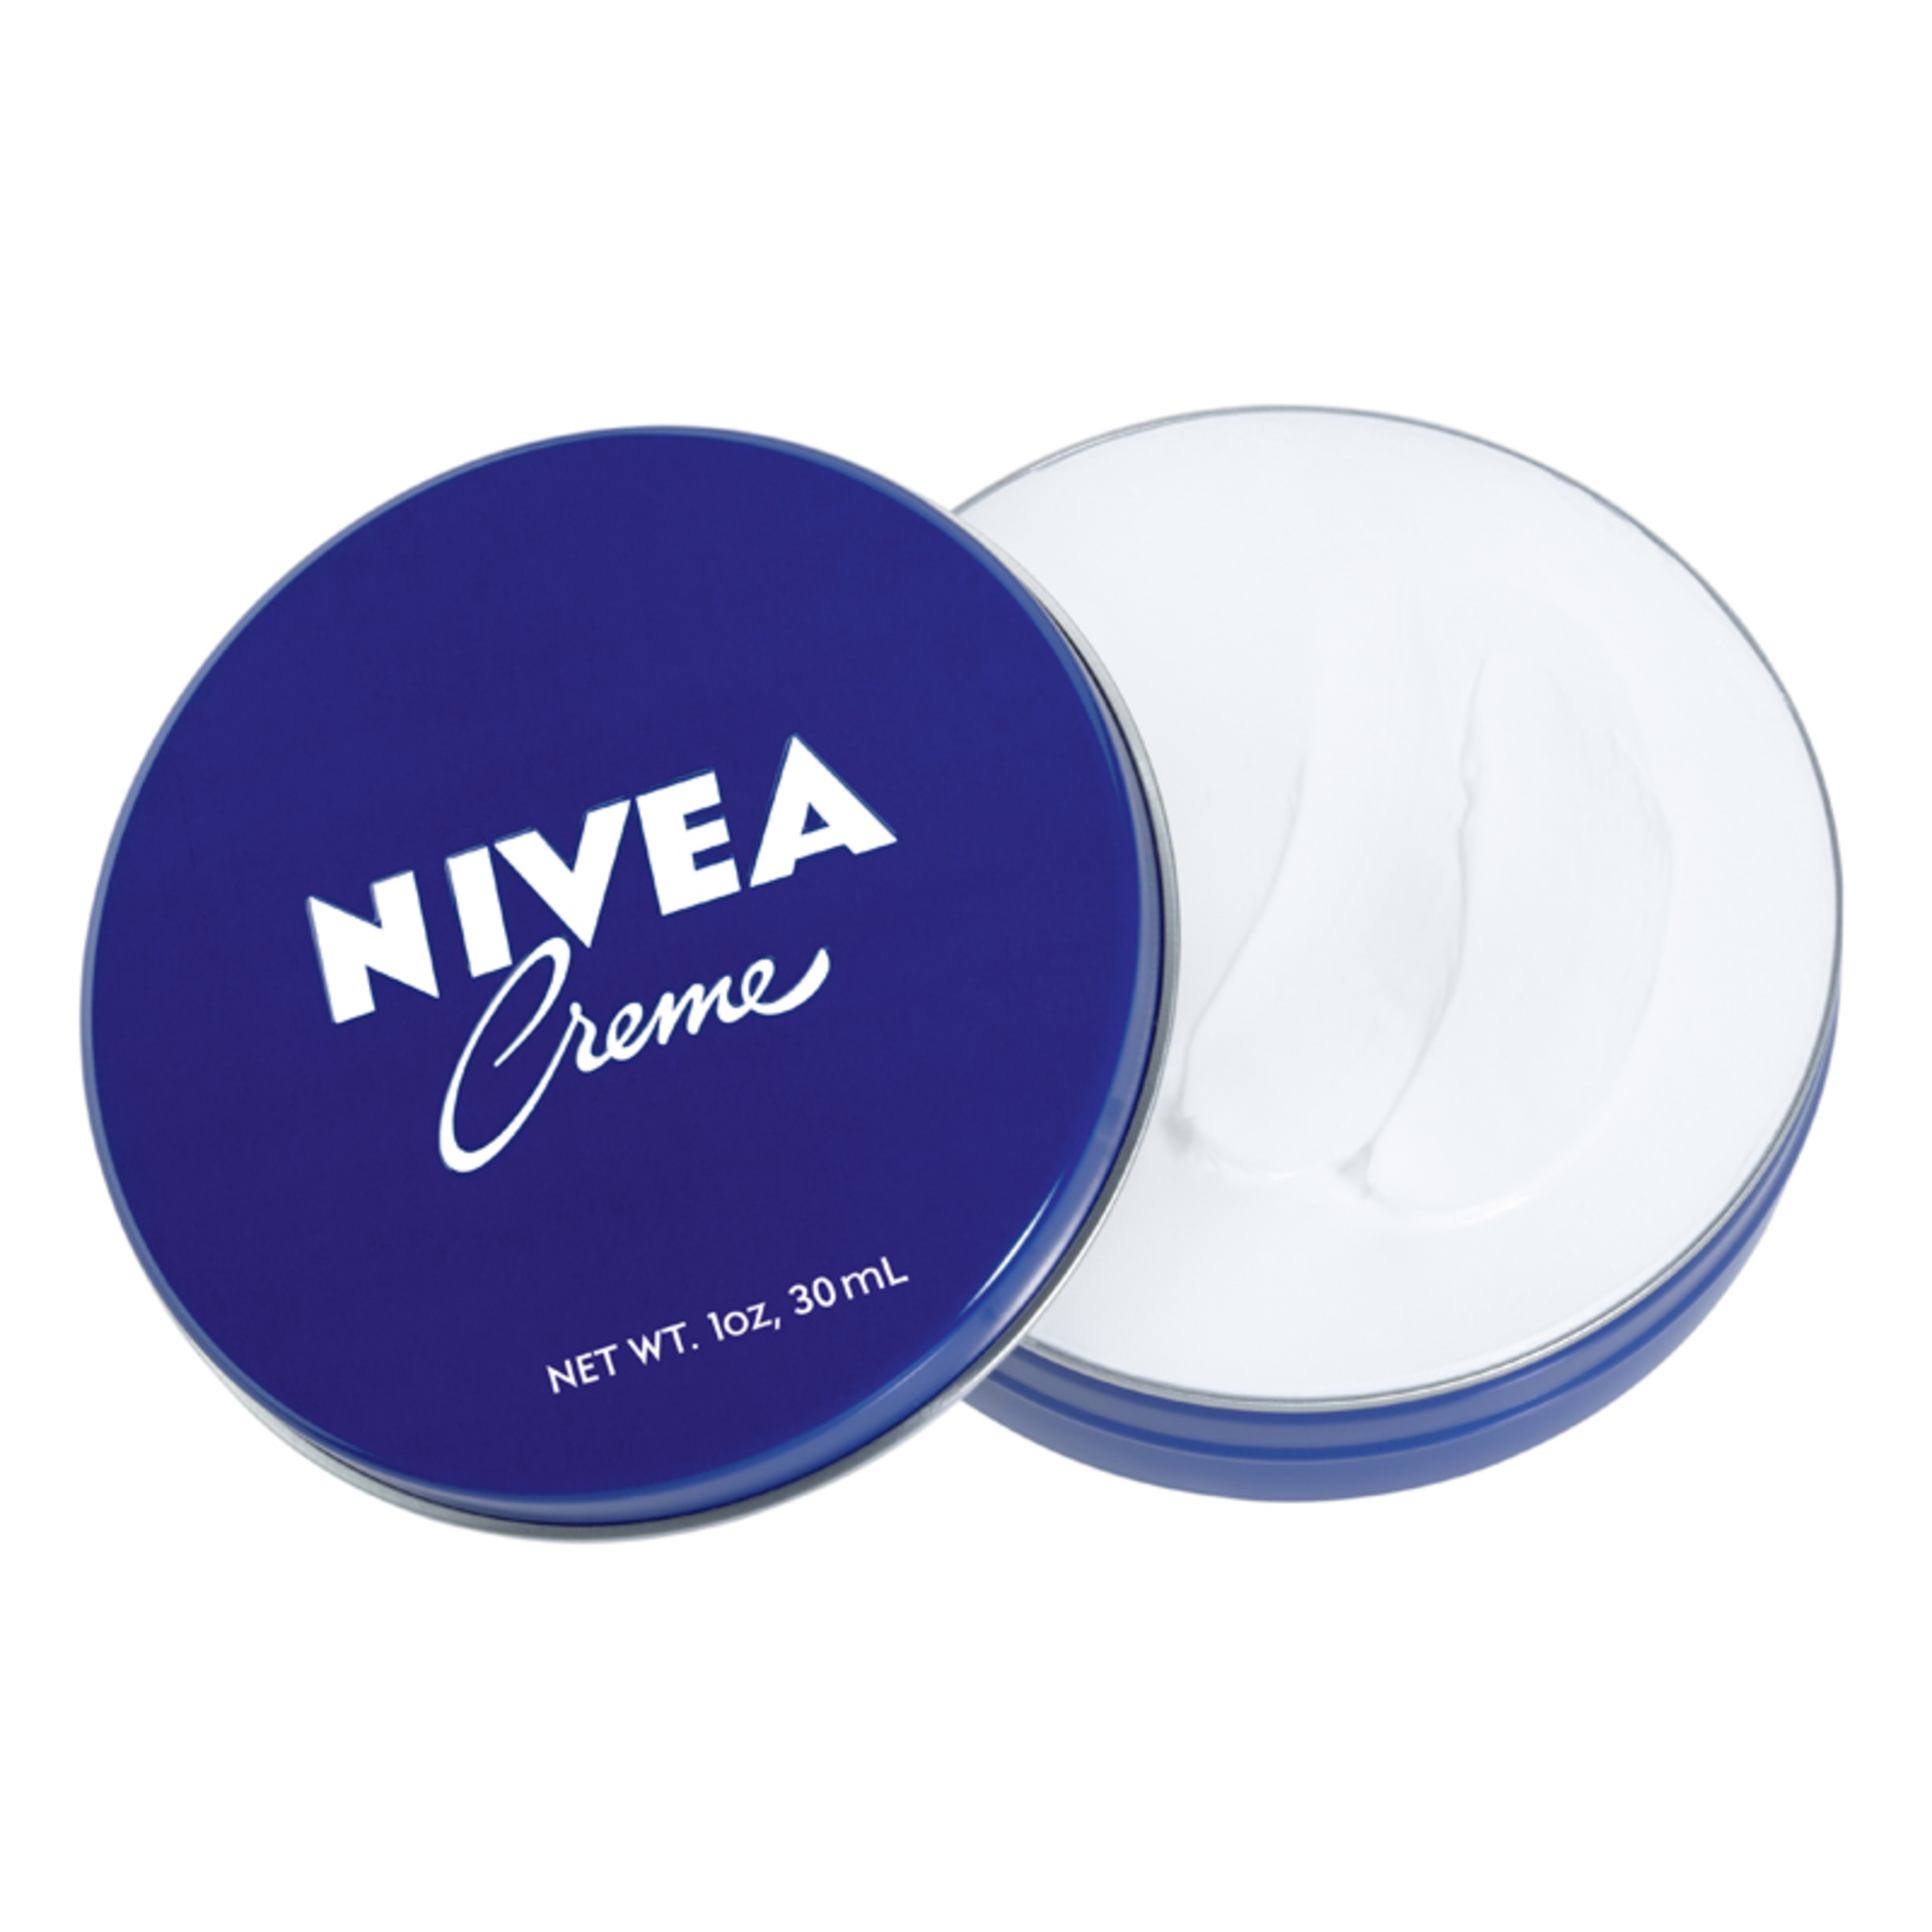 NIVEA Creme Body, Face and Hand Moisturizing Cream, 1 Oz Tin - image 3 of 14